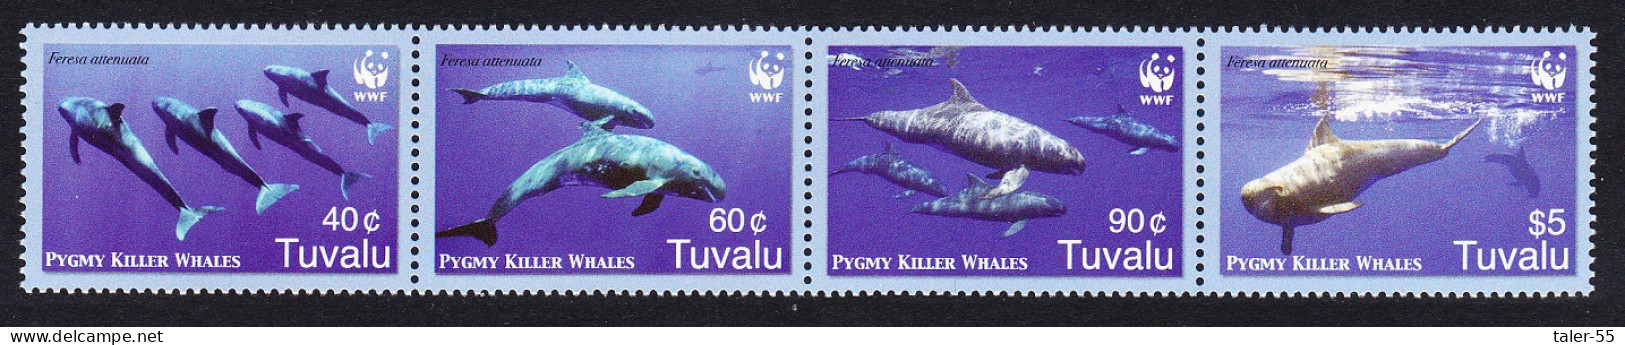 Tuvalu WWF Pygmy Killer Whale Strip Of 4v 2006 MNH SG#1224-1227 MI#1307-1310 Sc#1022a-d - Tuvalu